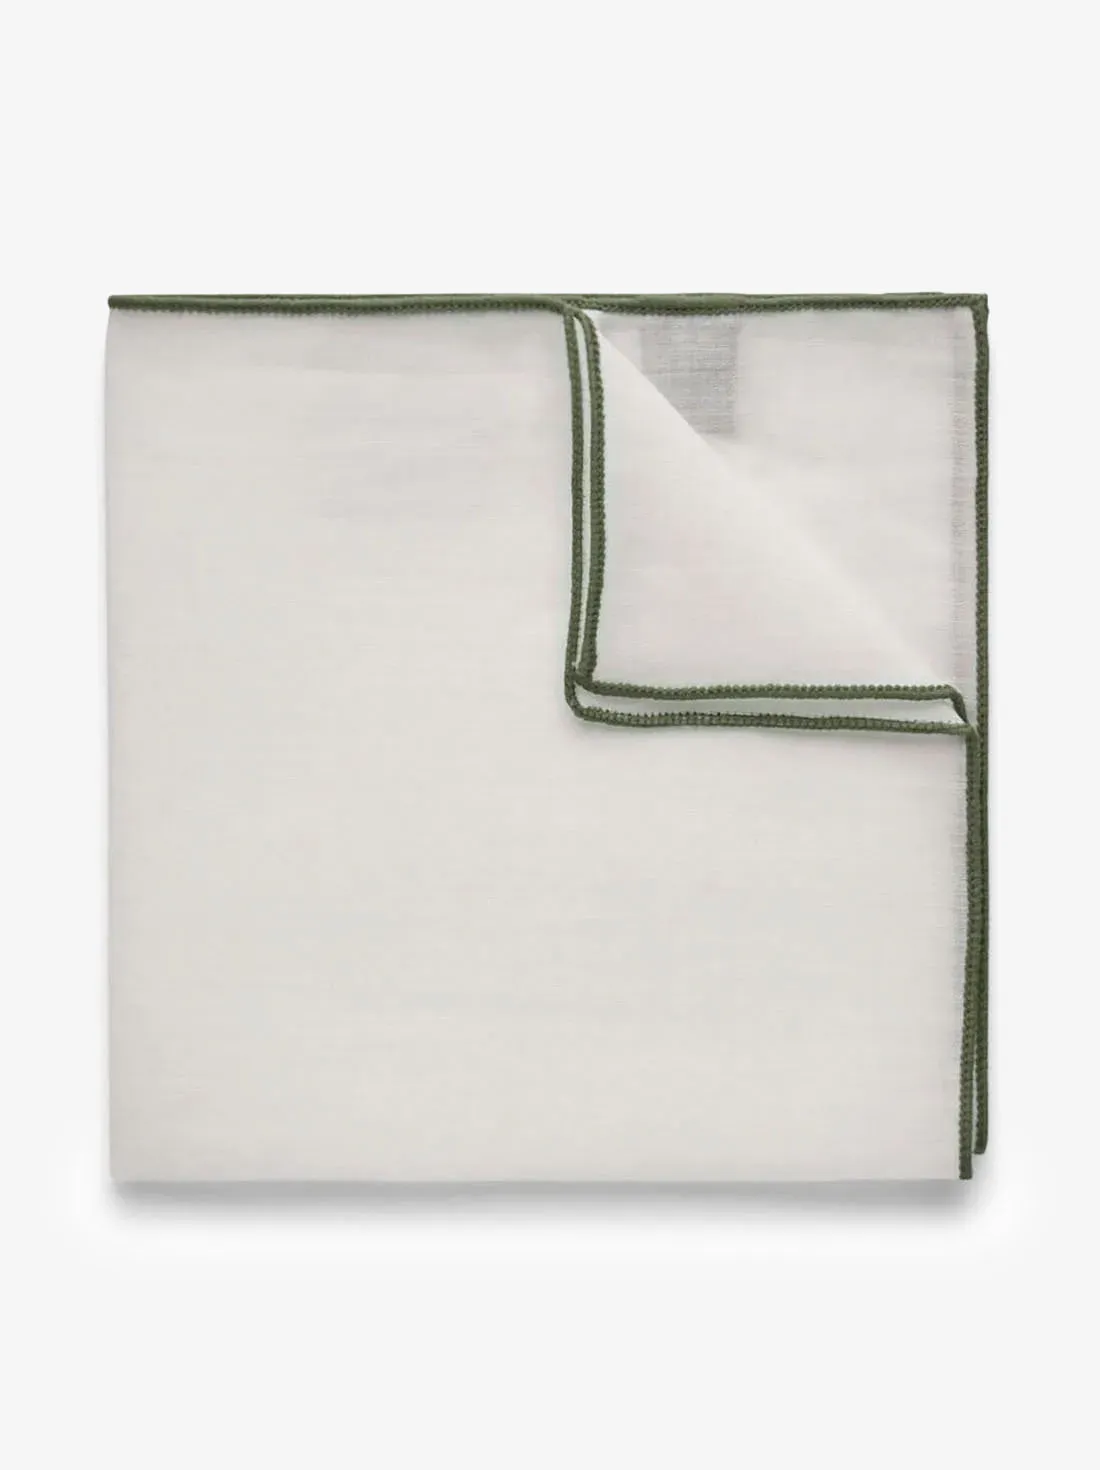 Olive Green & White Pocket Square Linen